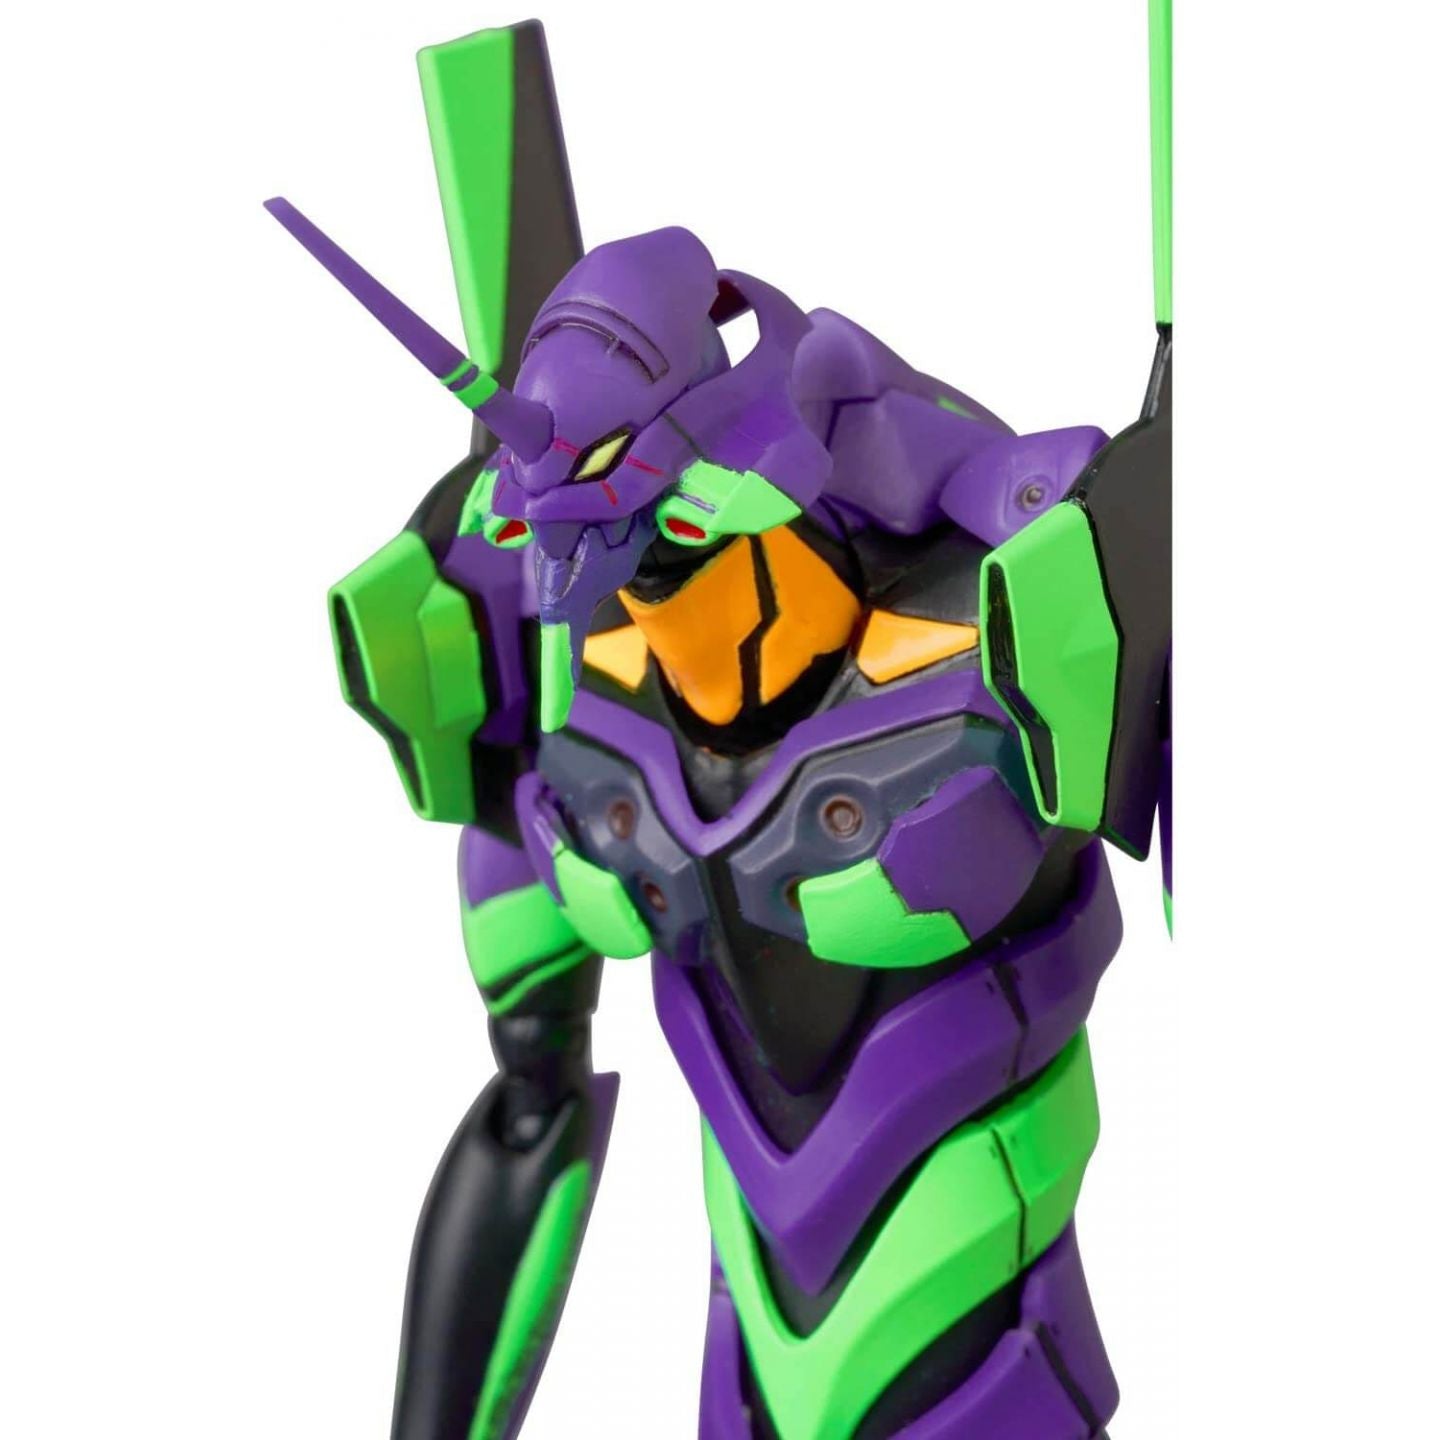 Medicom Toy Mafex Action Figure: Evangelion - Eva Unit 01 Figura De Accion